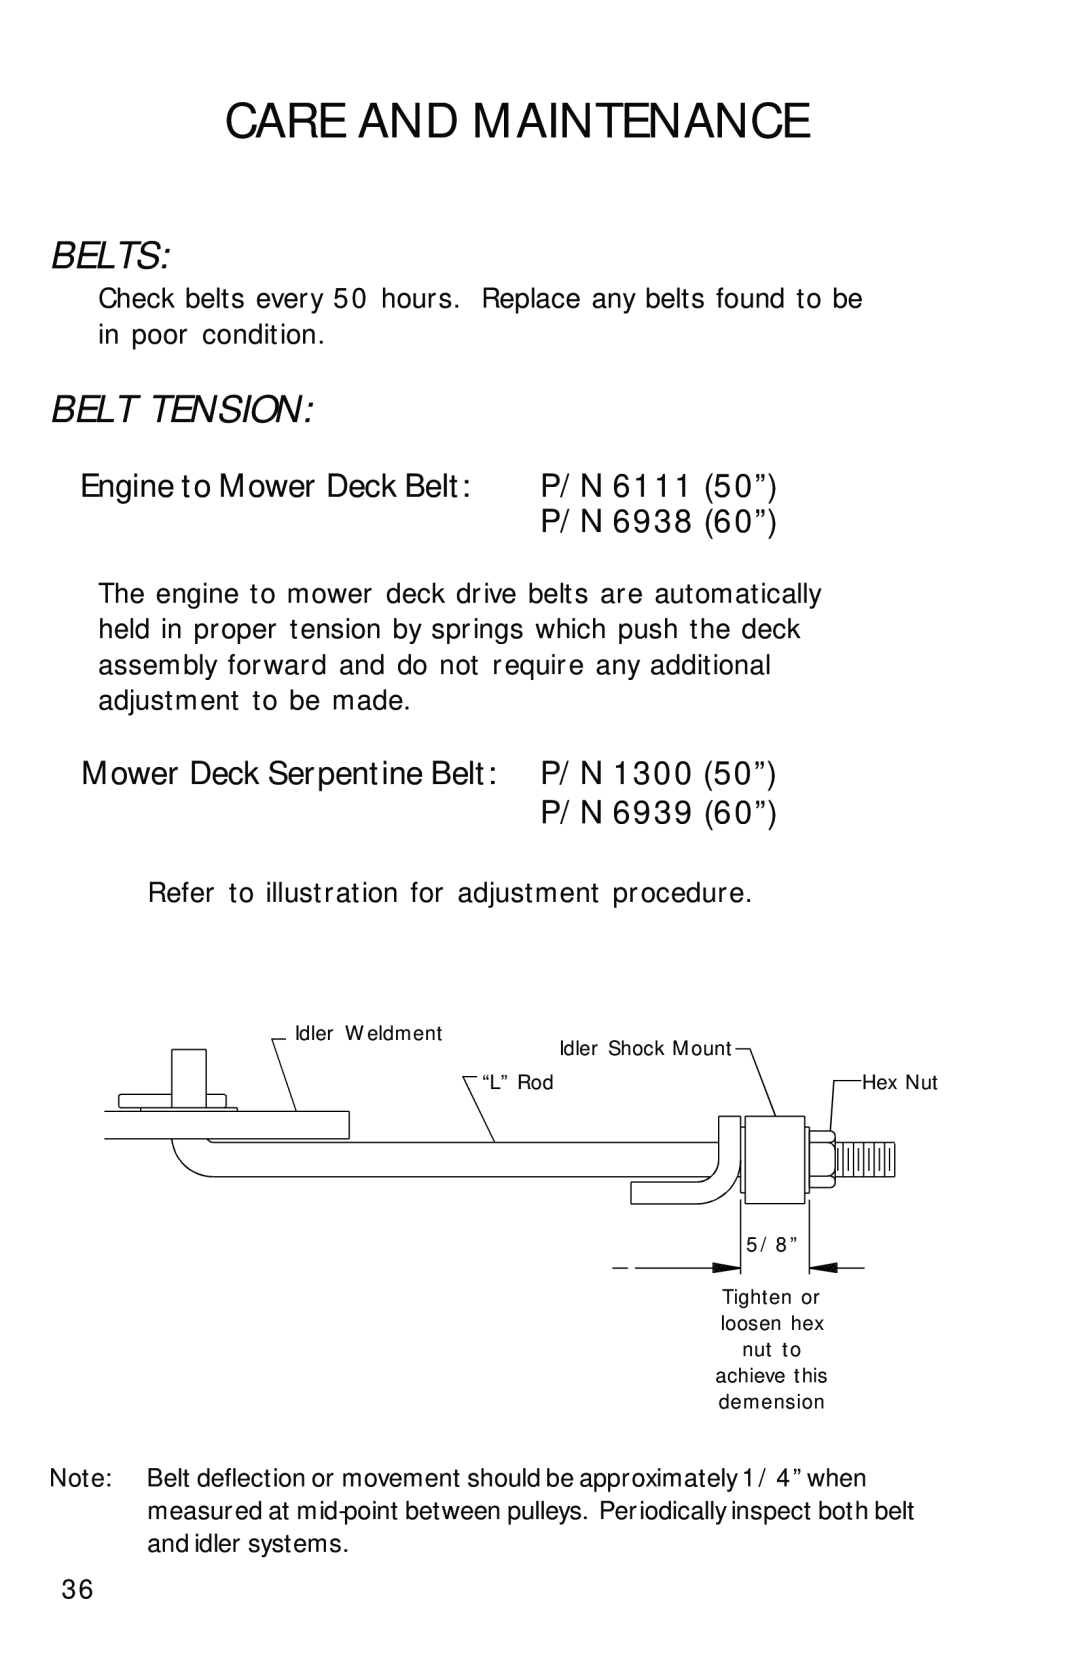 Dixon ZTR 2300 manual Belts, Belt Tension, Engine to Mower Deck Belt, P/N 6111 50”, P/N 6938 60”, Care And Maintenance 